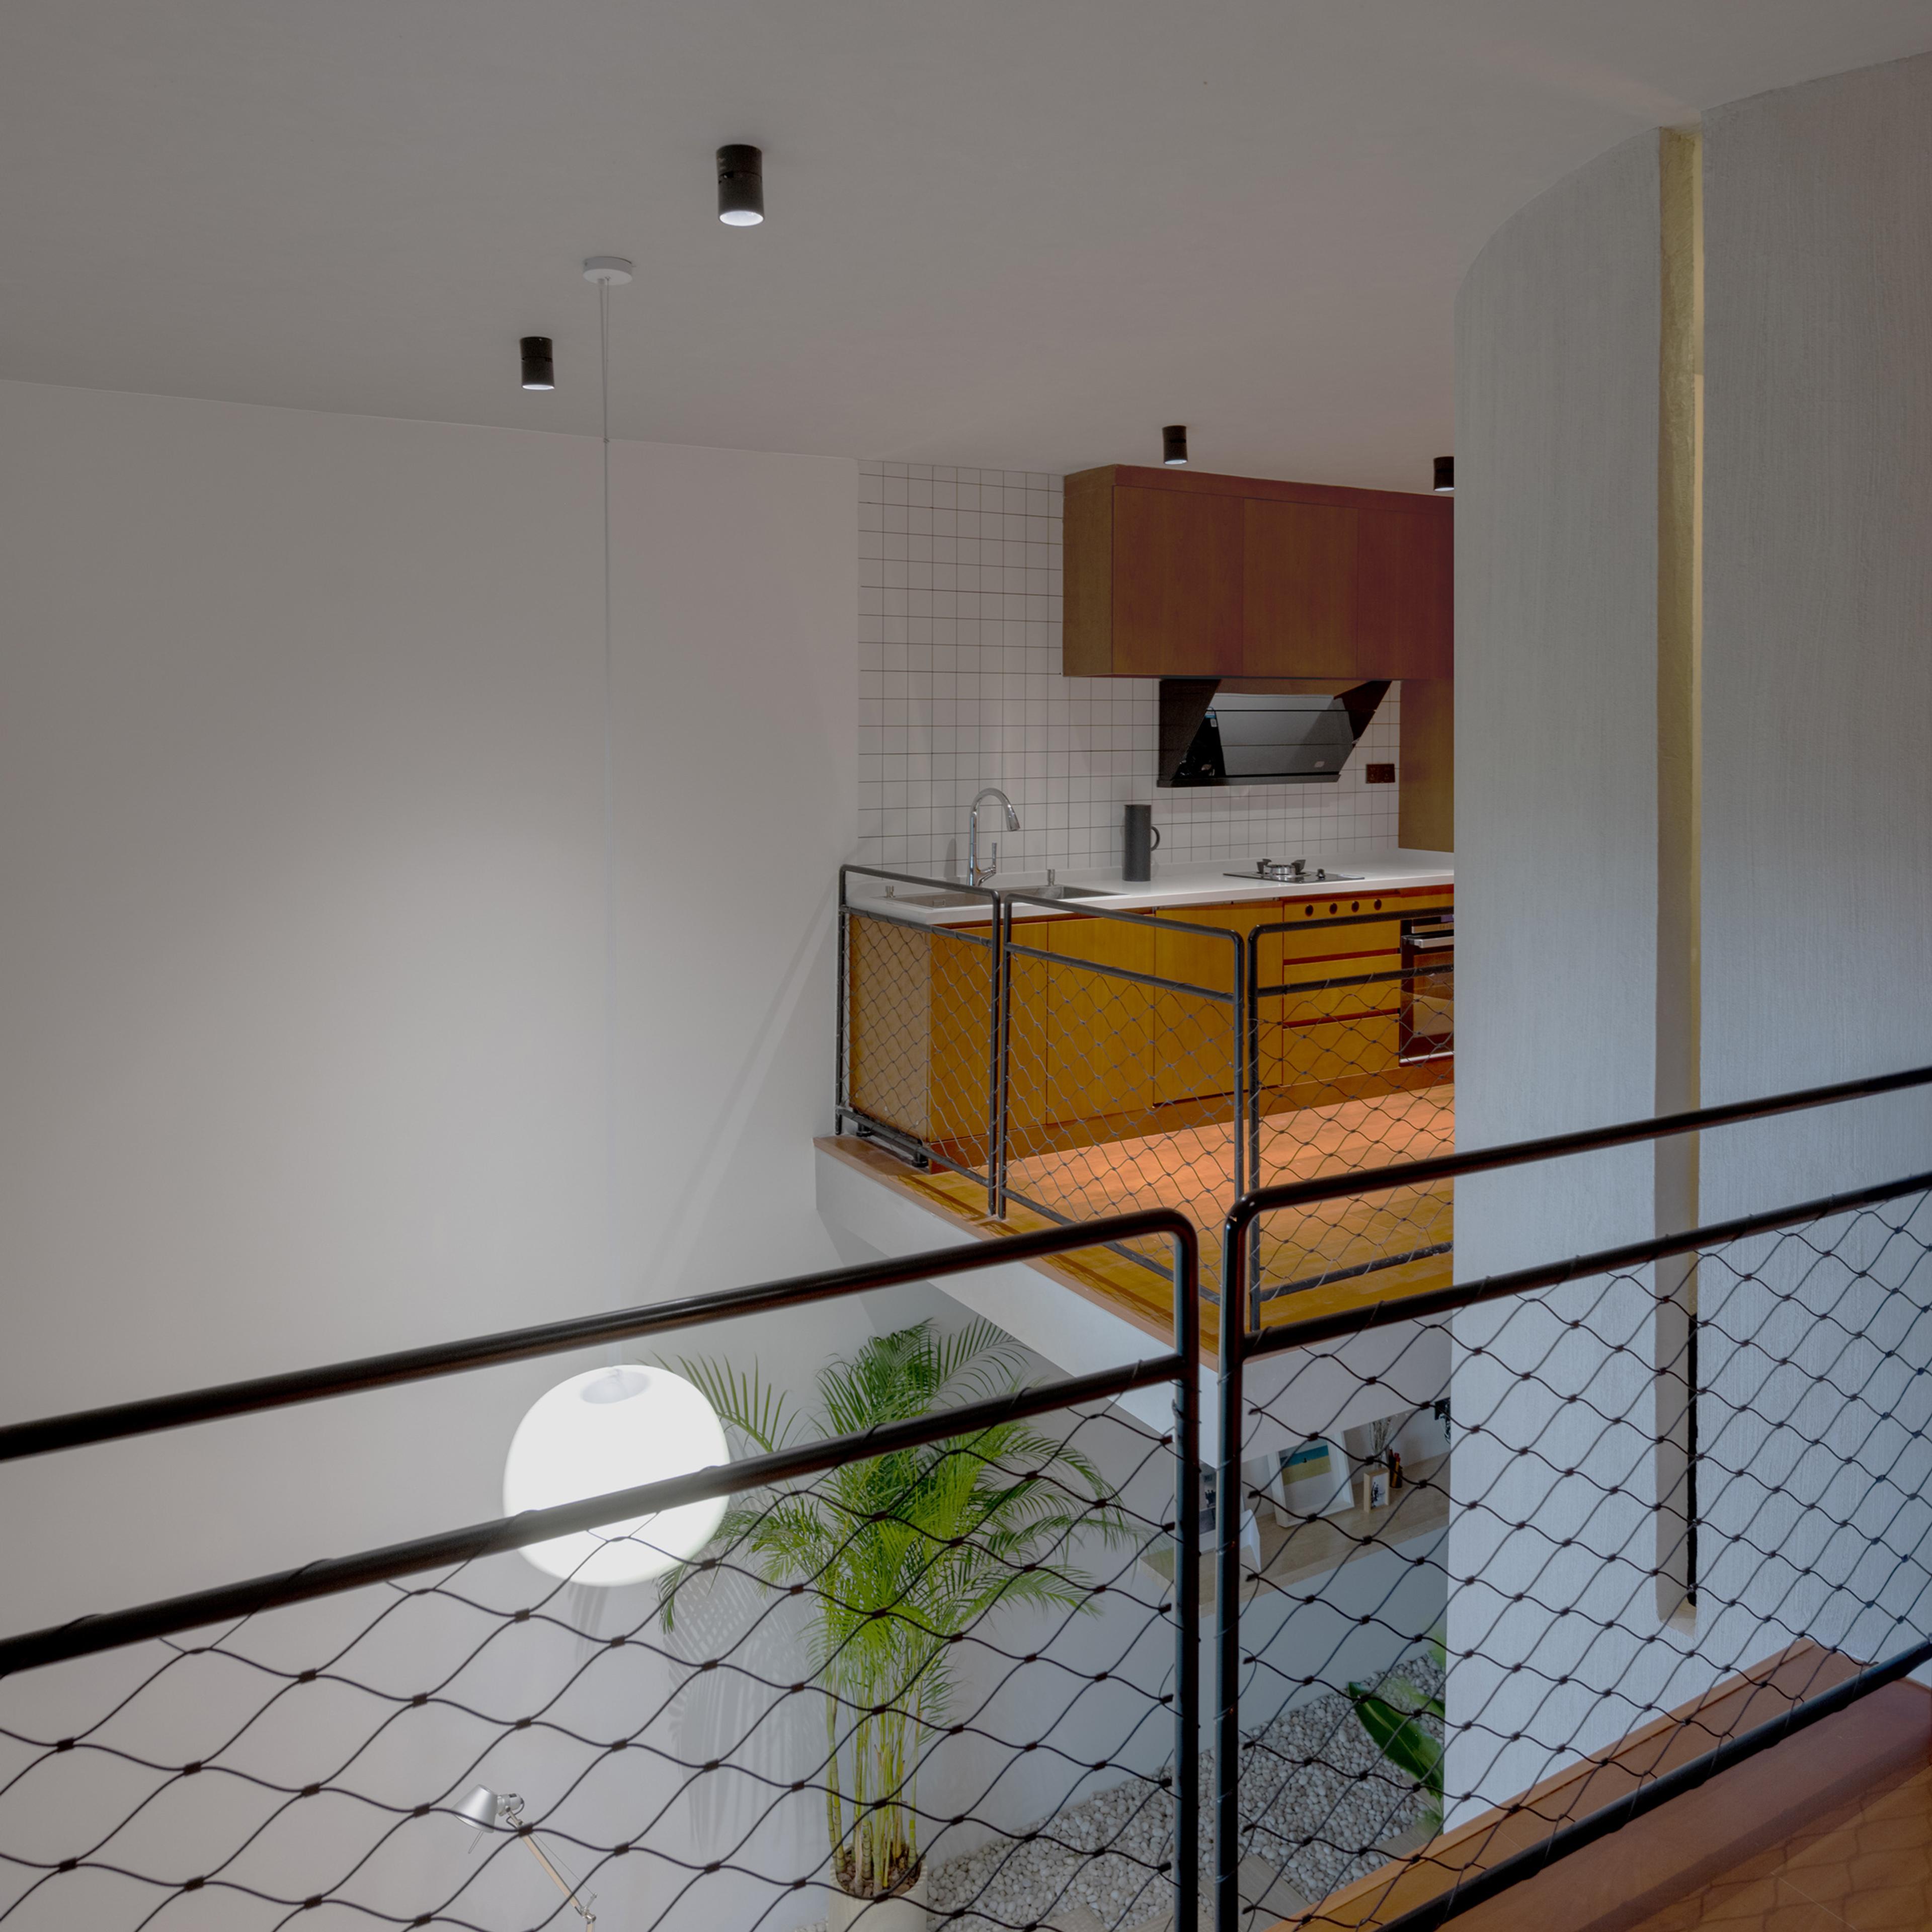 interior of loft apartment with kitchen and garden below